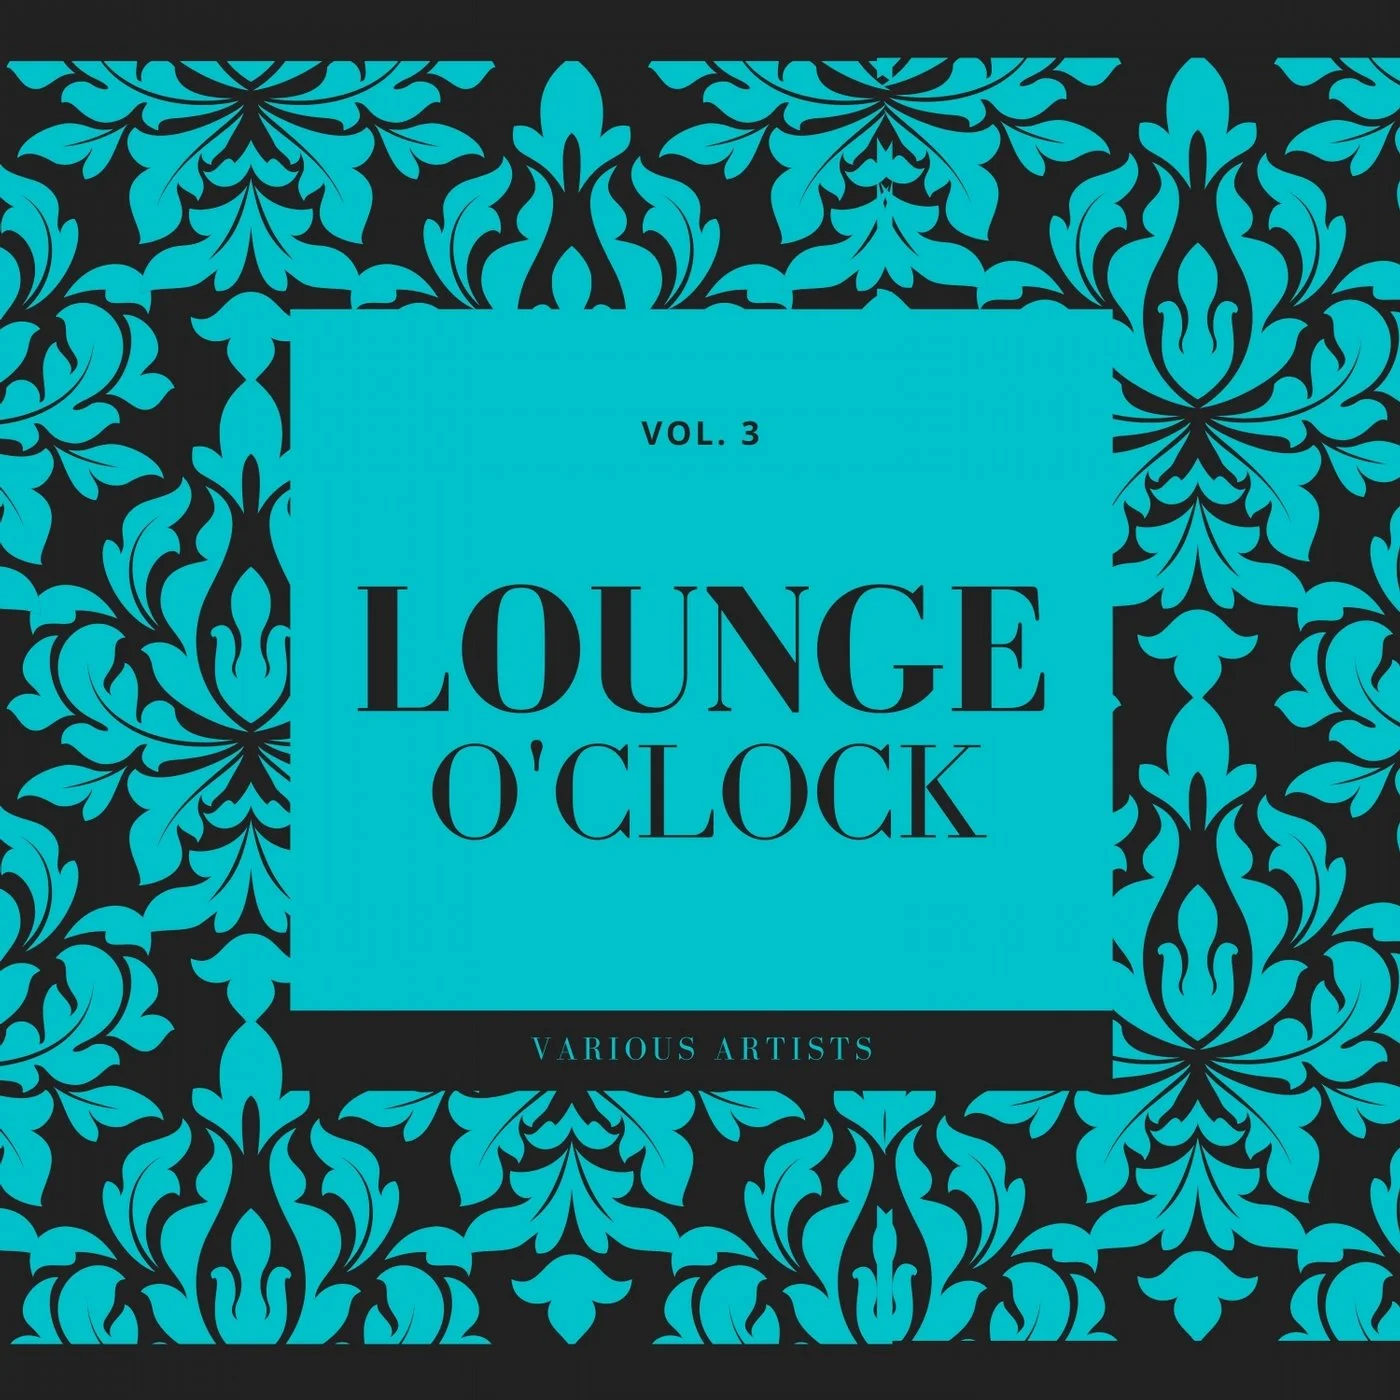 Cover von Compilation "Lounge O'clock, Vol. 3"